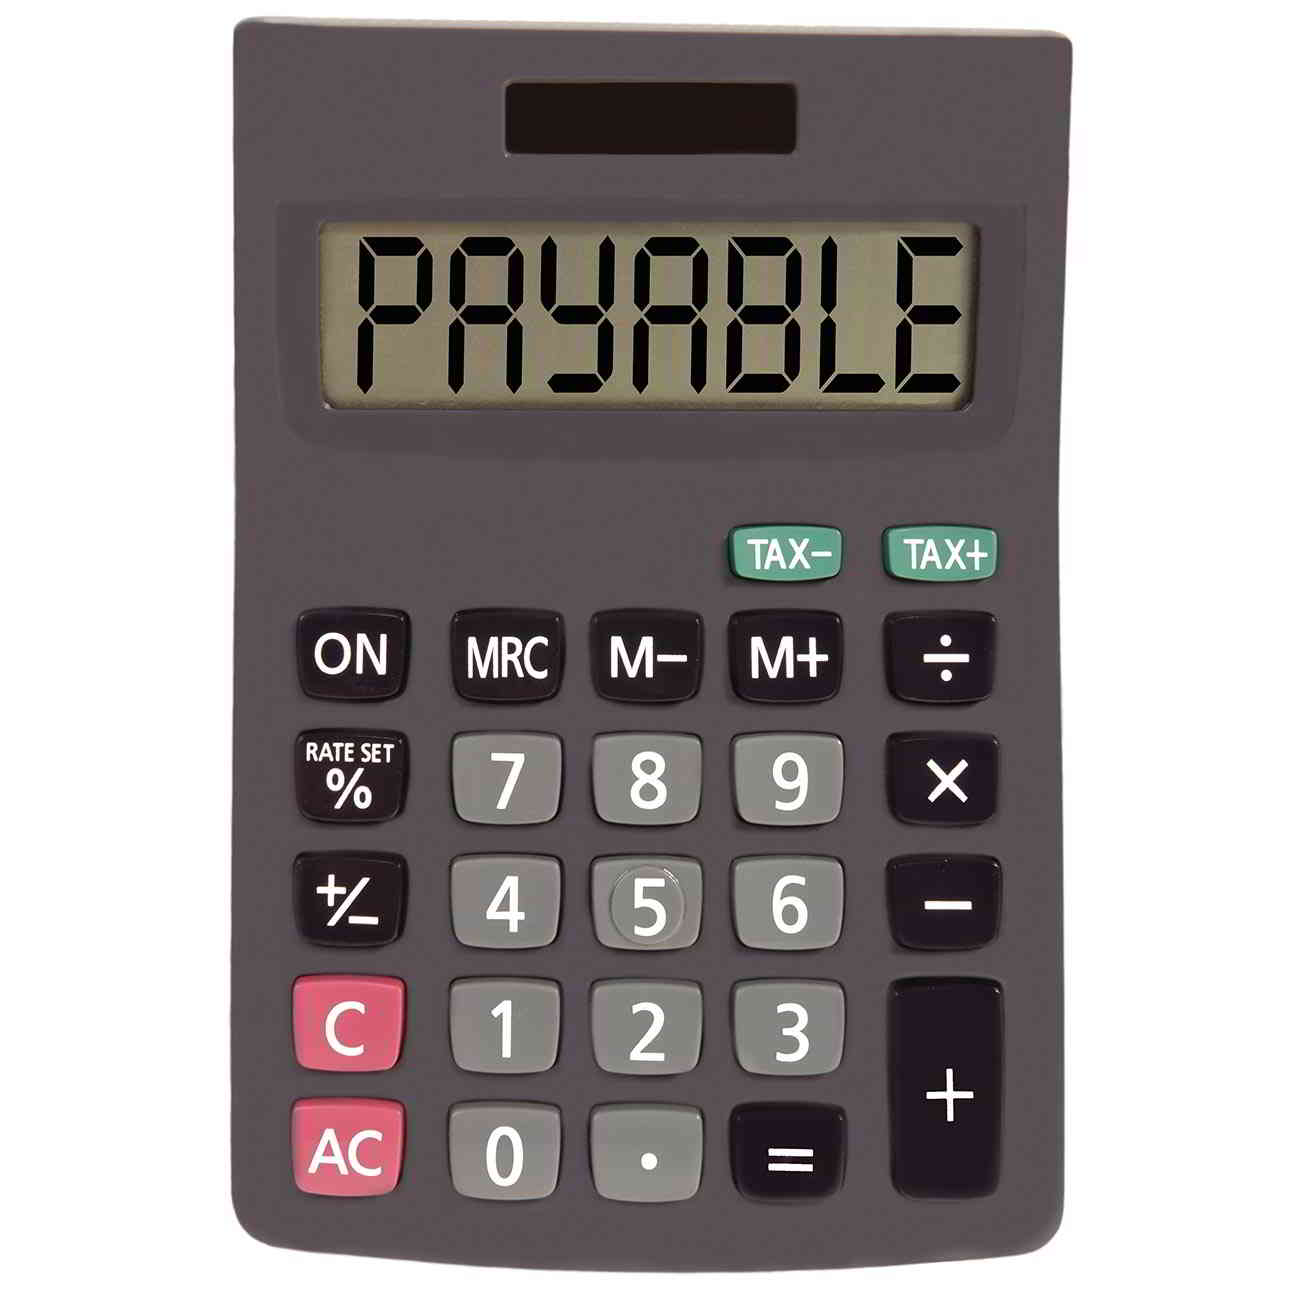 debt calculator